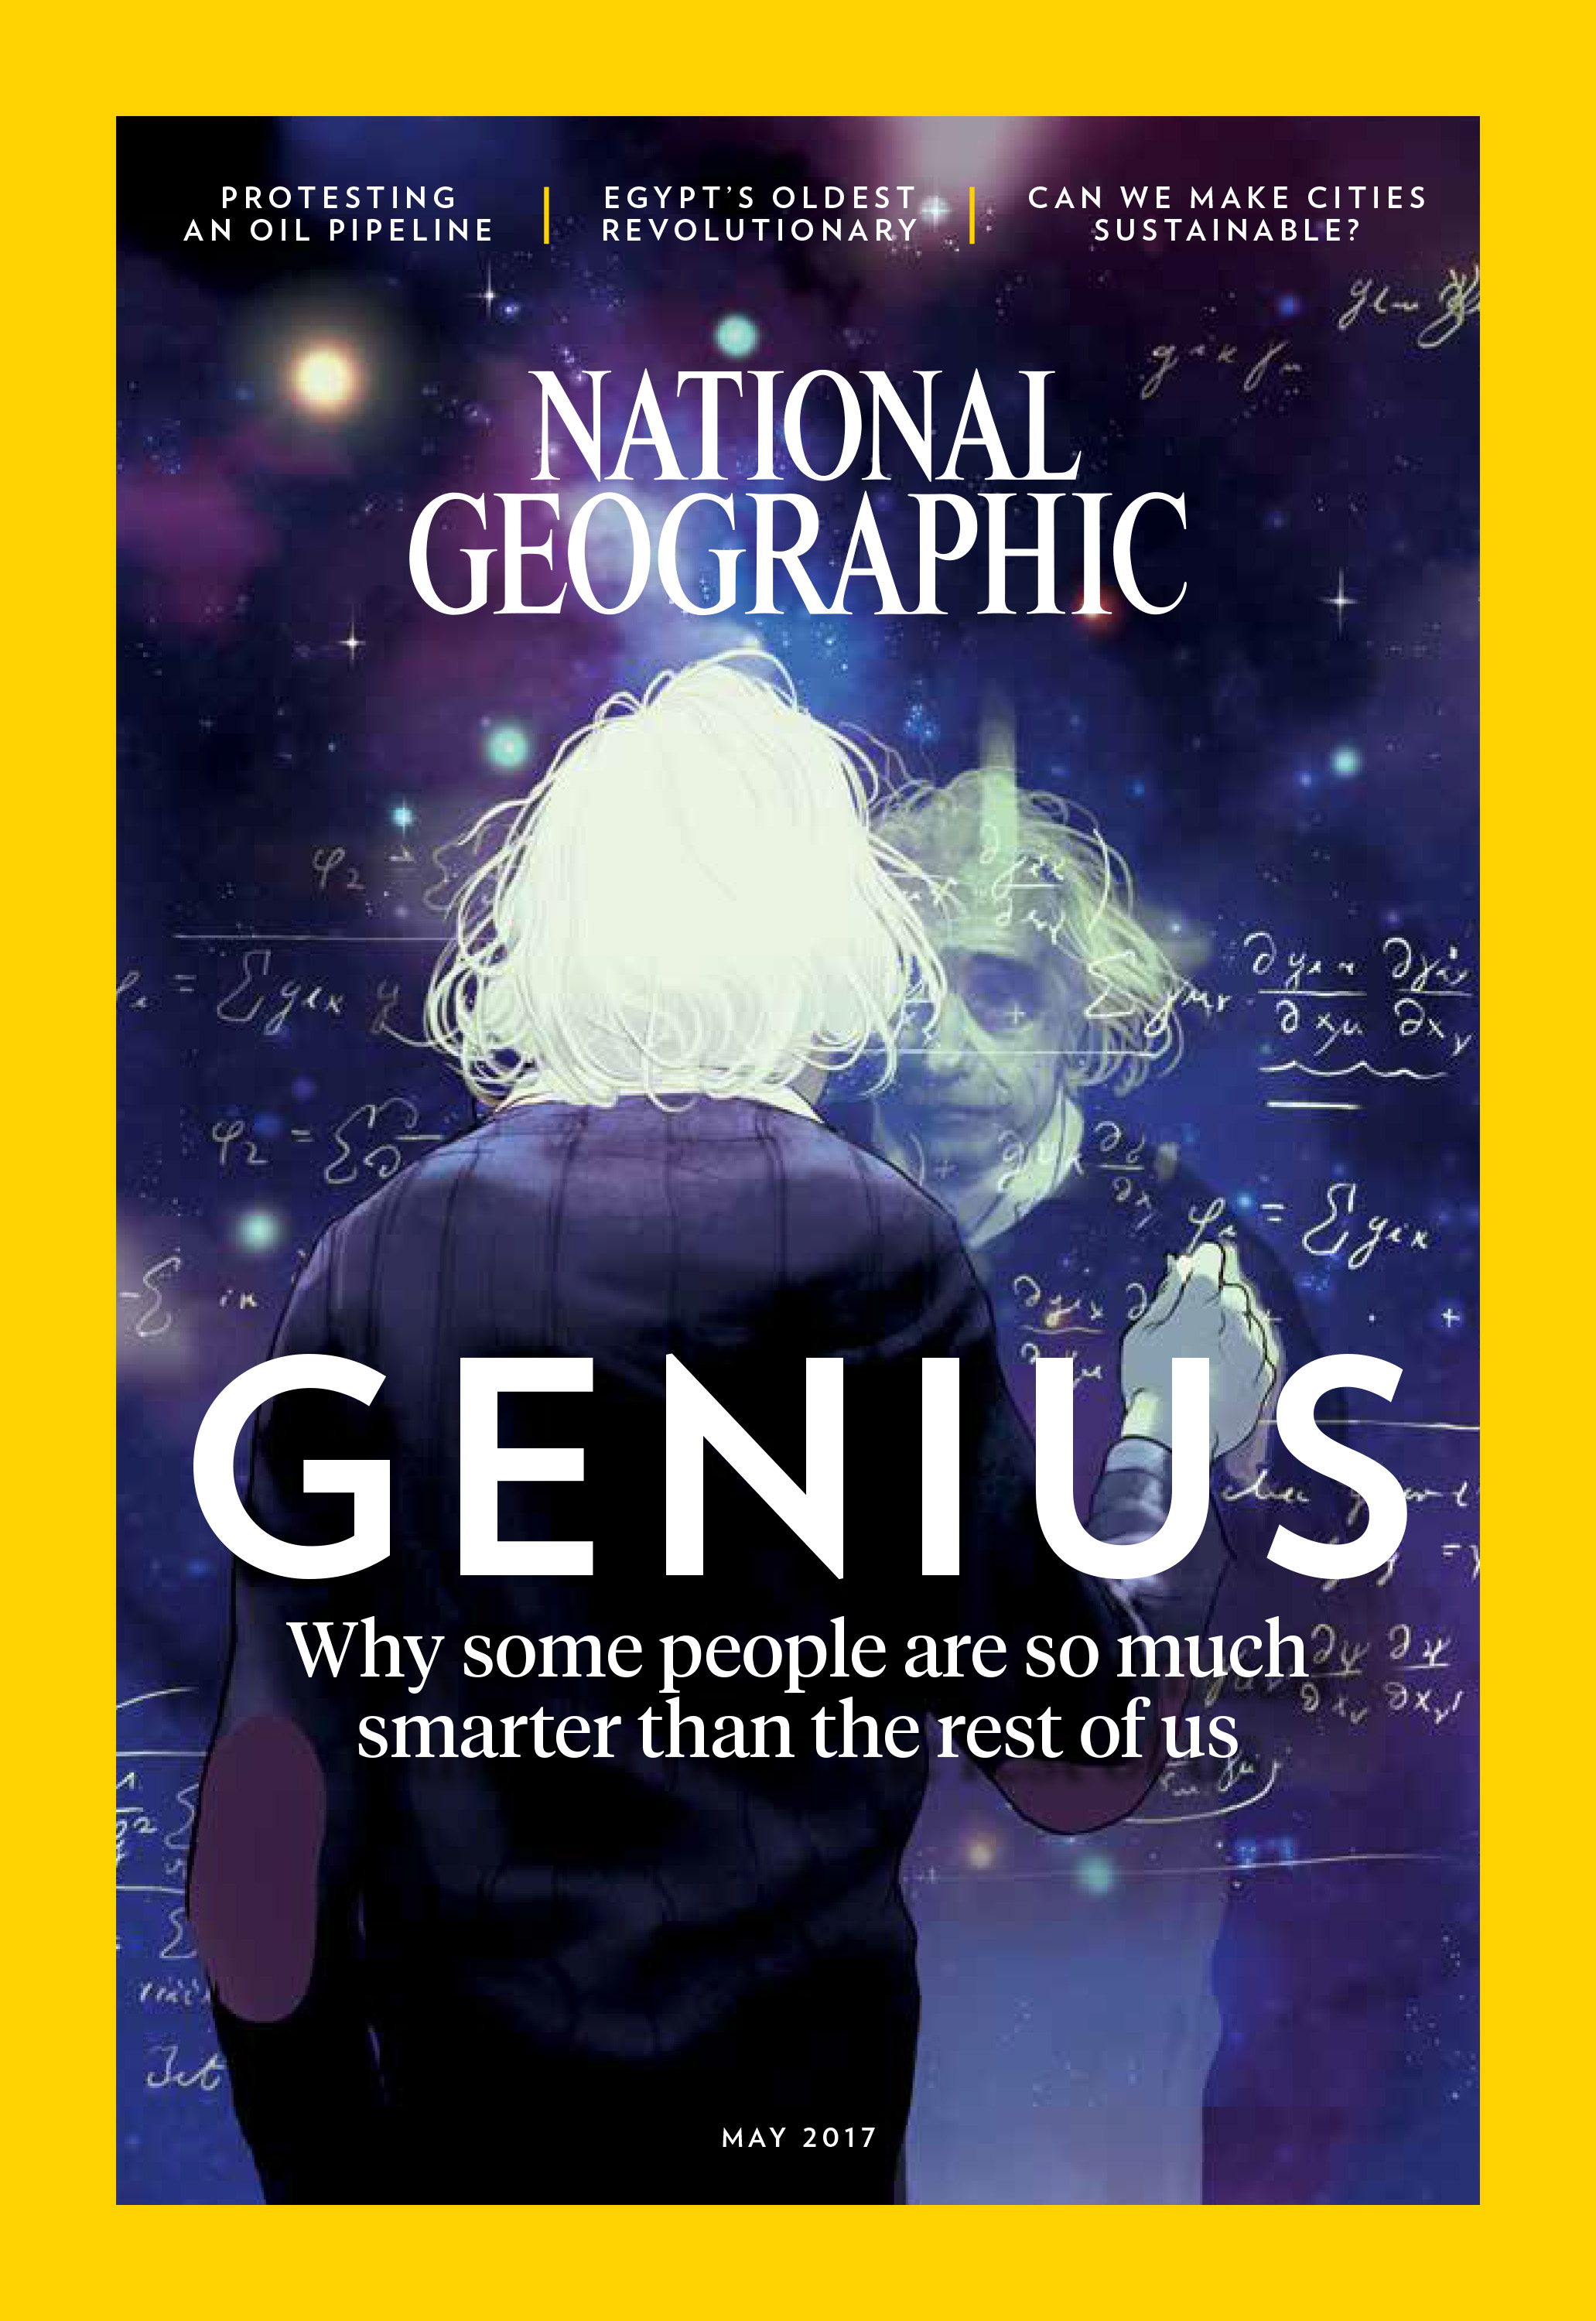 Genius Cover Image High Res.jpg